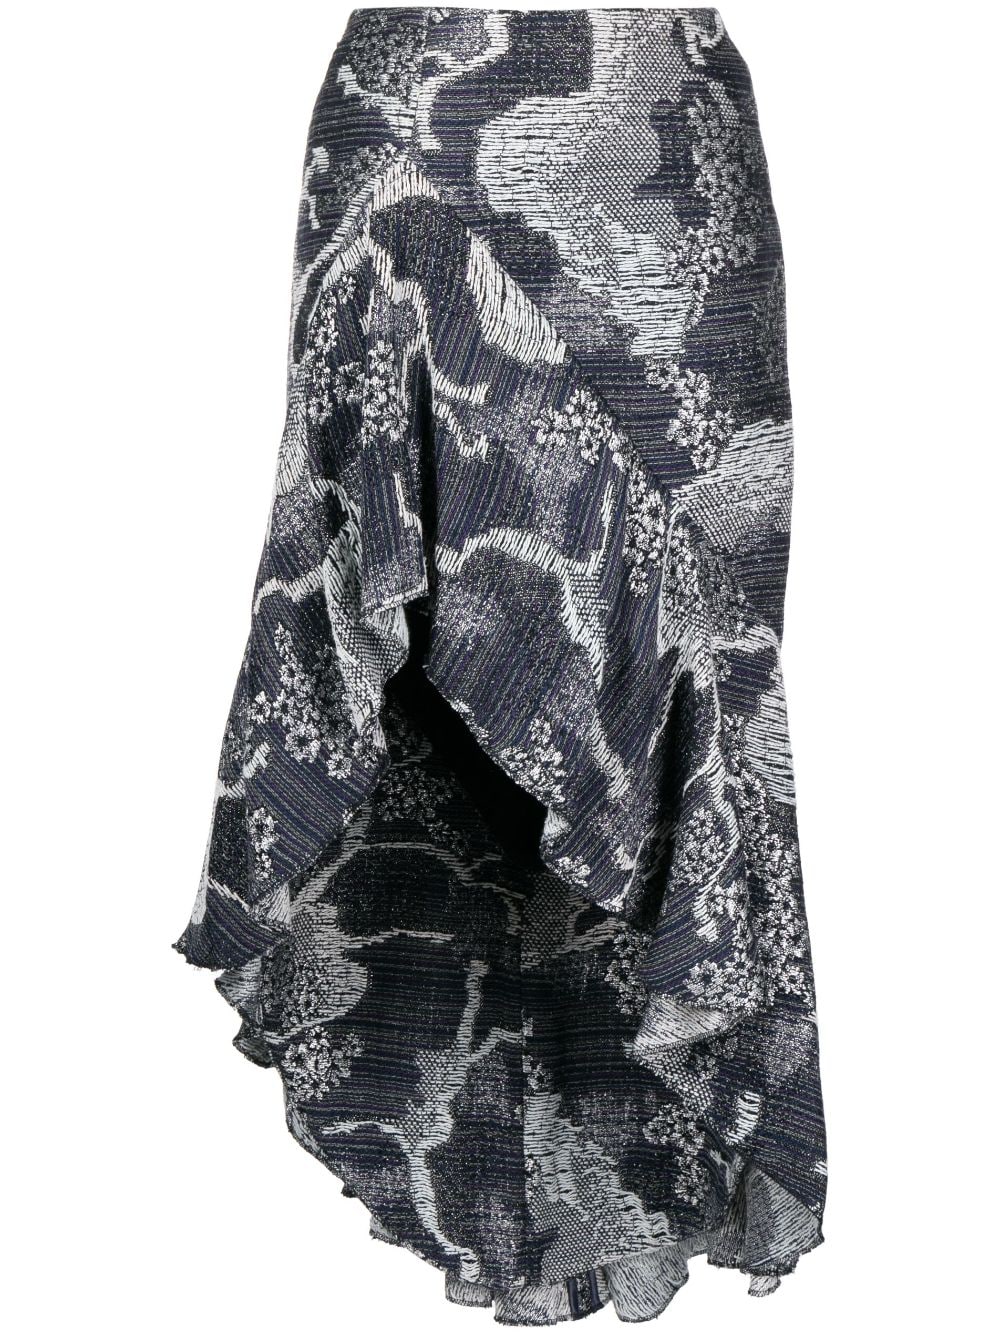 Saiid Kobeisy asymmetrical tweed ruffled skirt - Blue